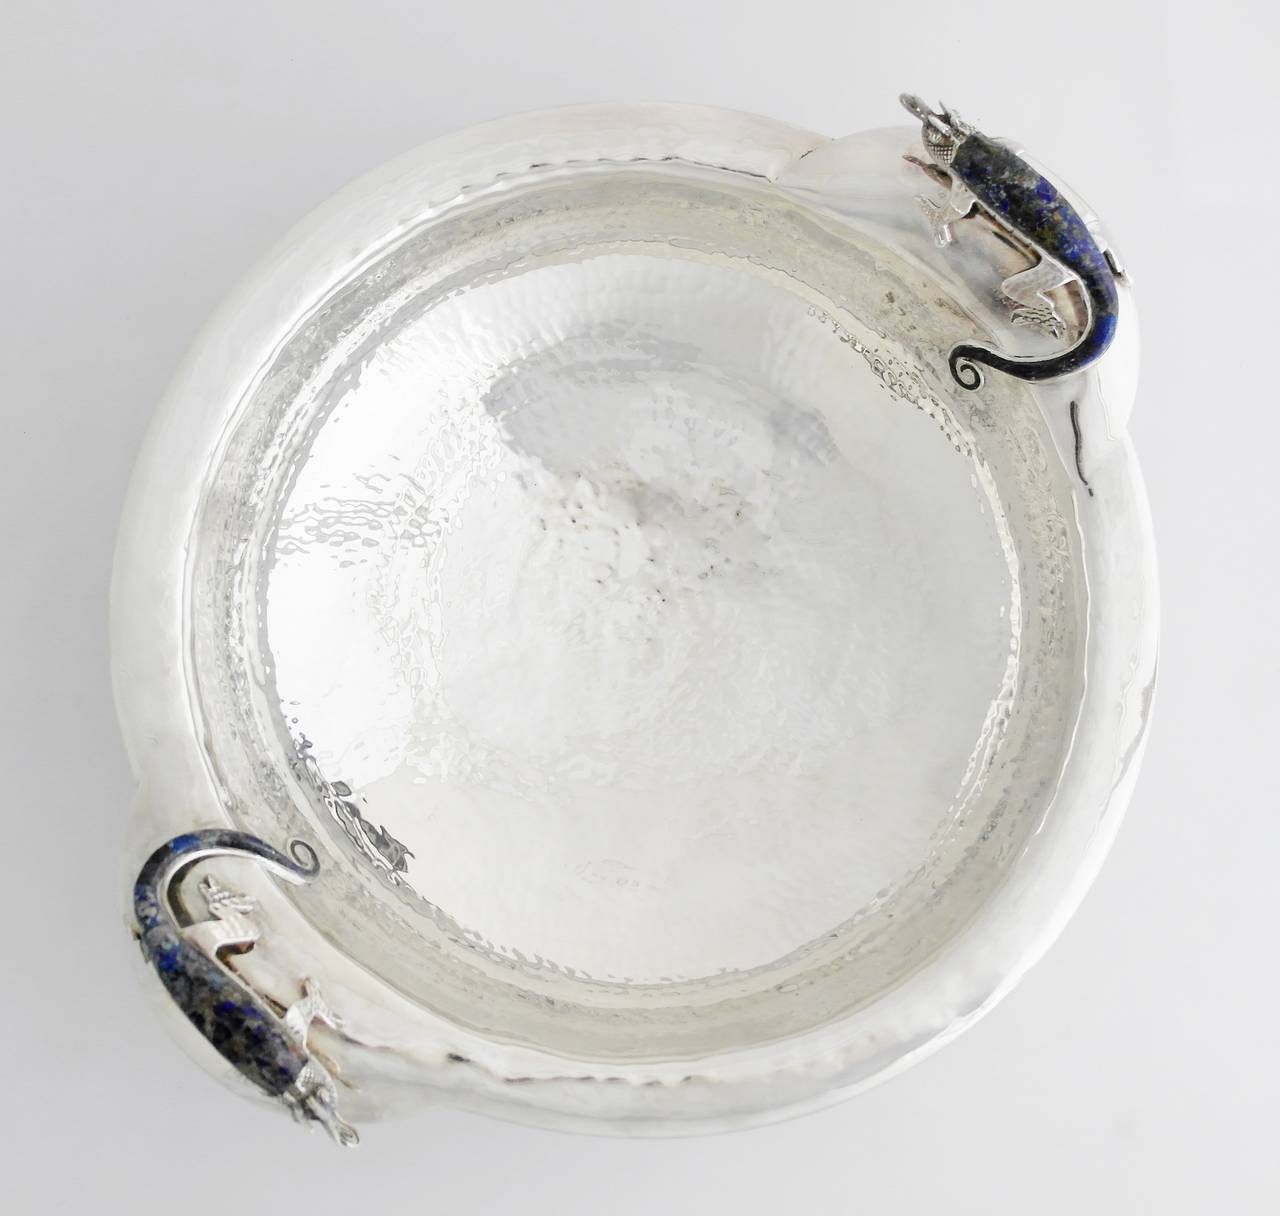 Contemporary Emilia Castillo Silverplate Handmade Centerpiece Bowl Figural Iguanas